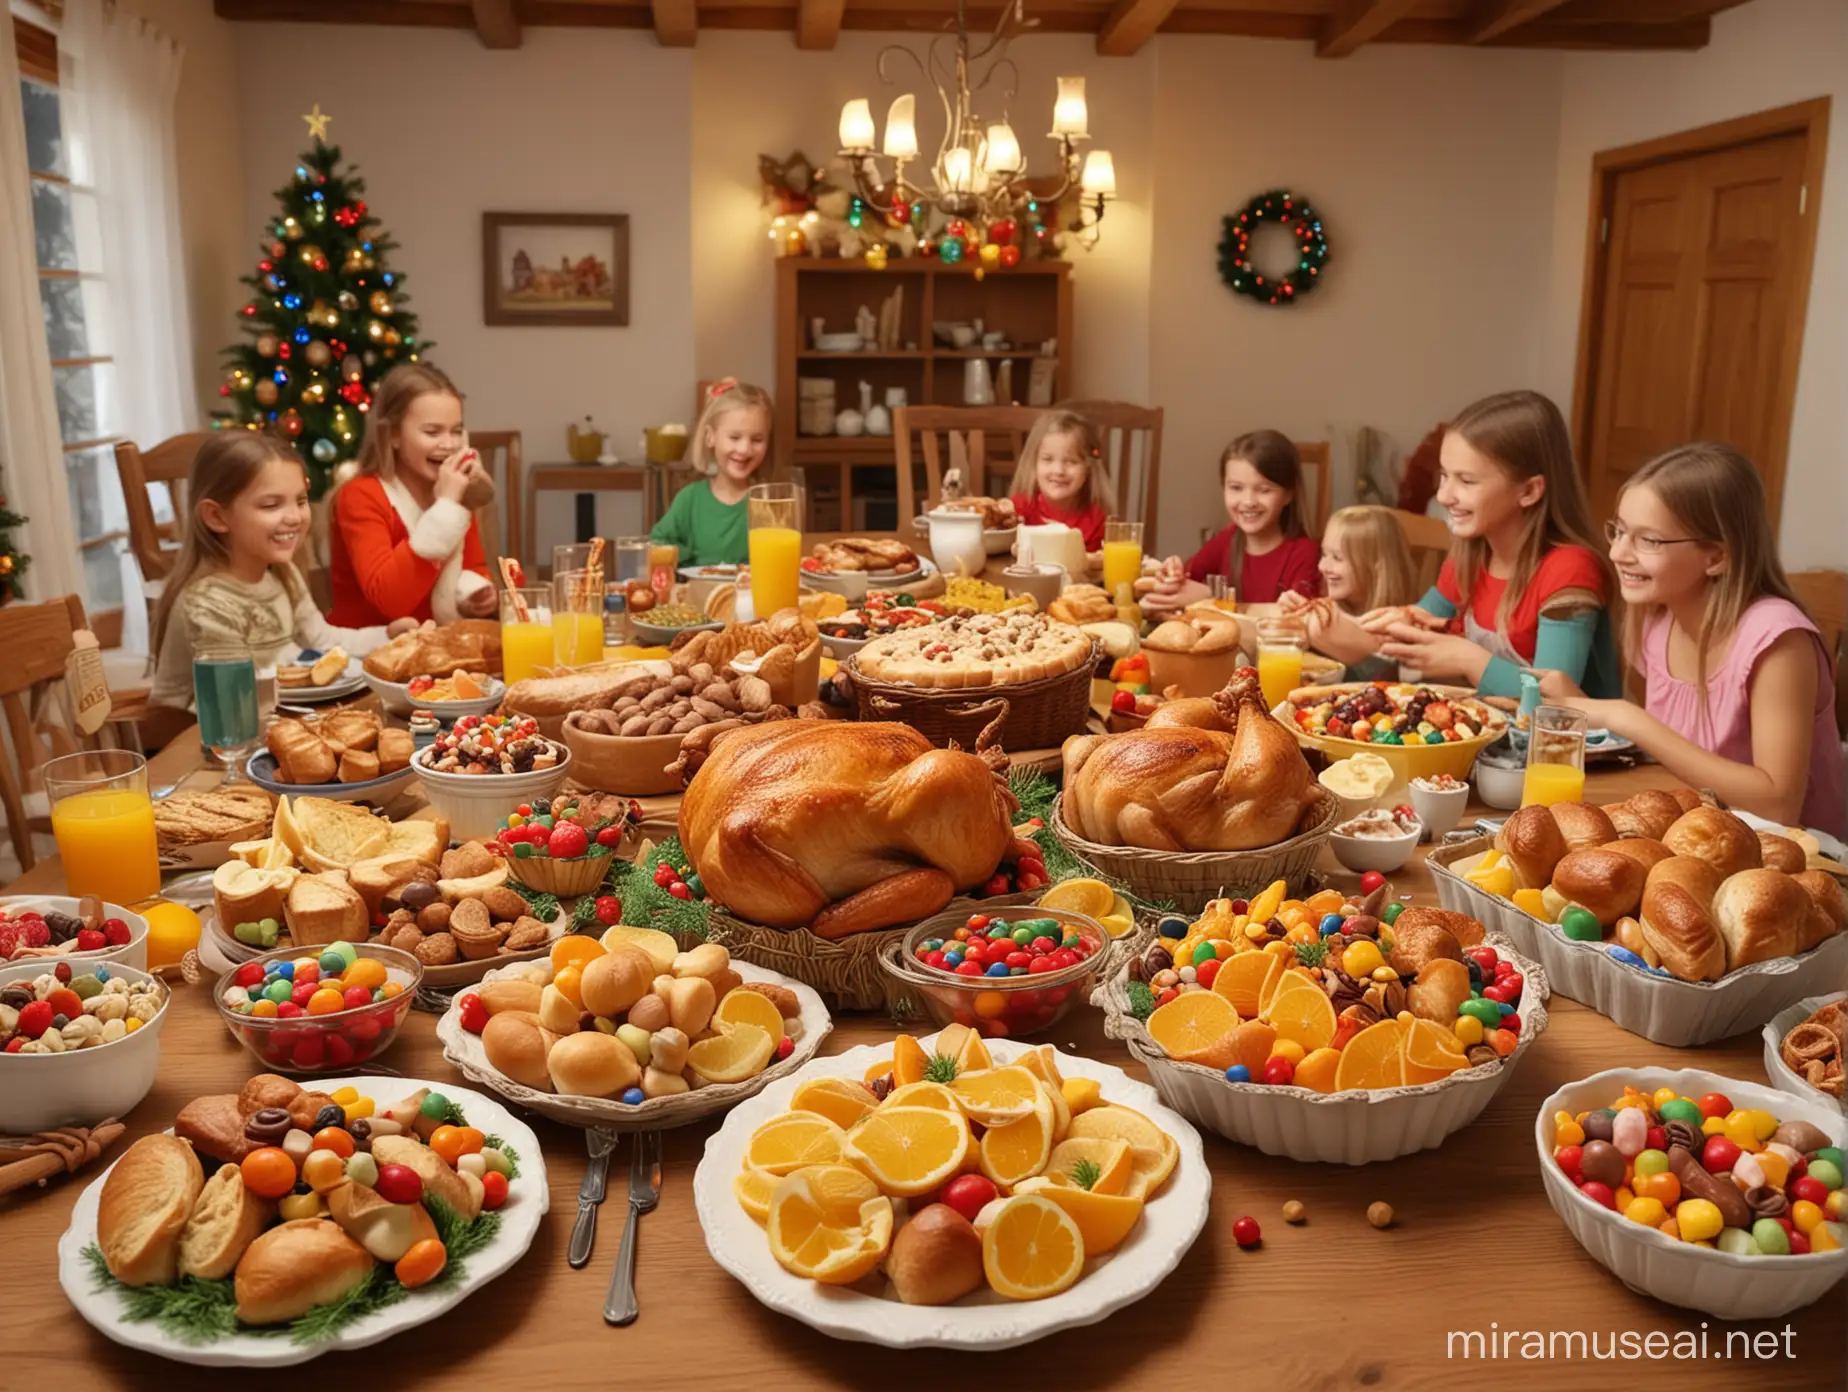 Joyful Family Christmas Feast Delightful Spread on Wooden Table